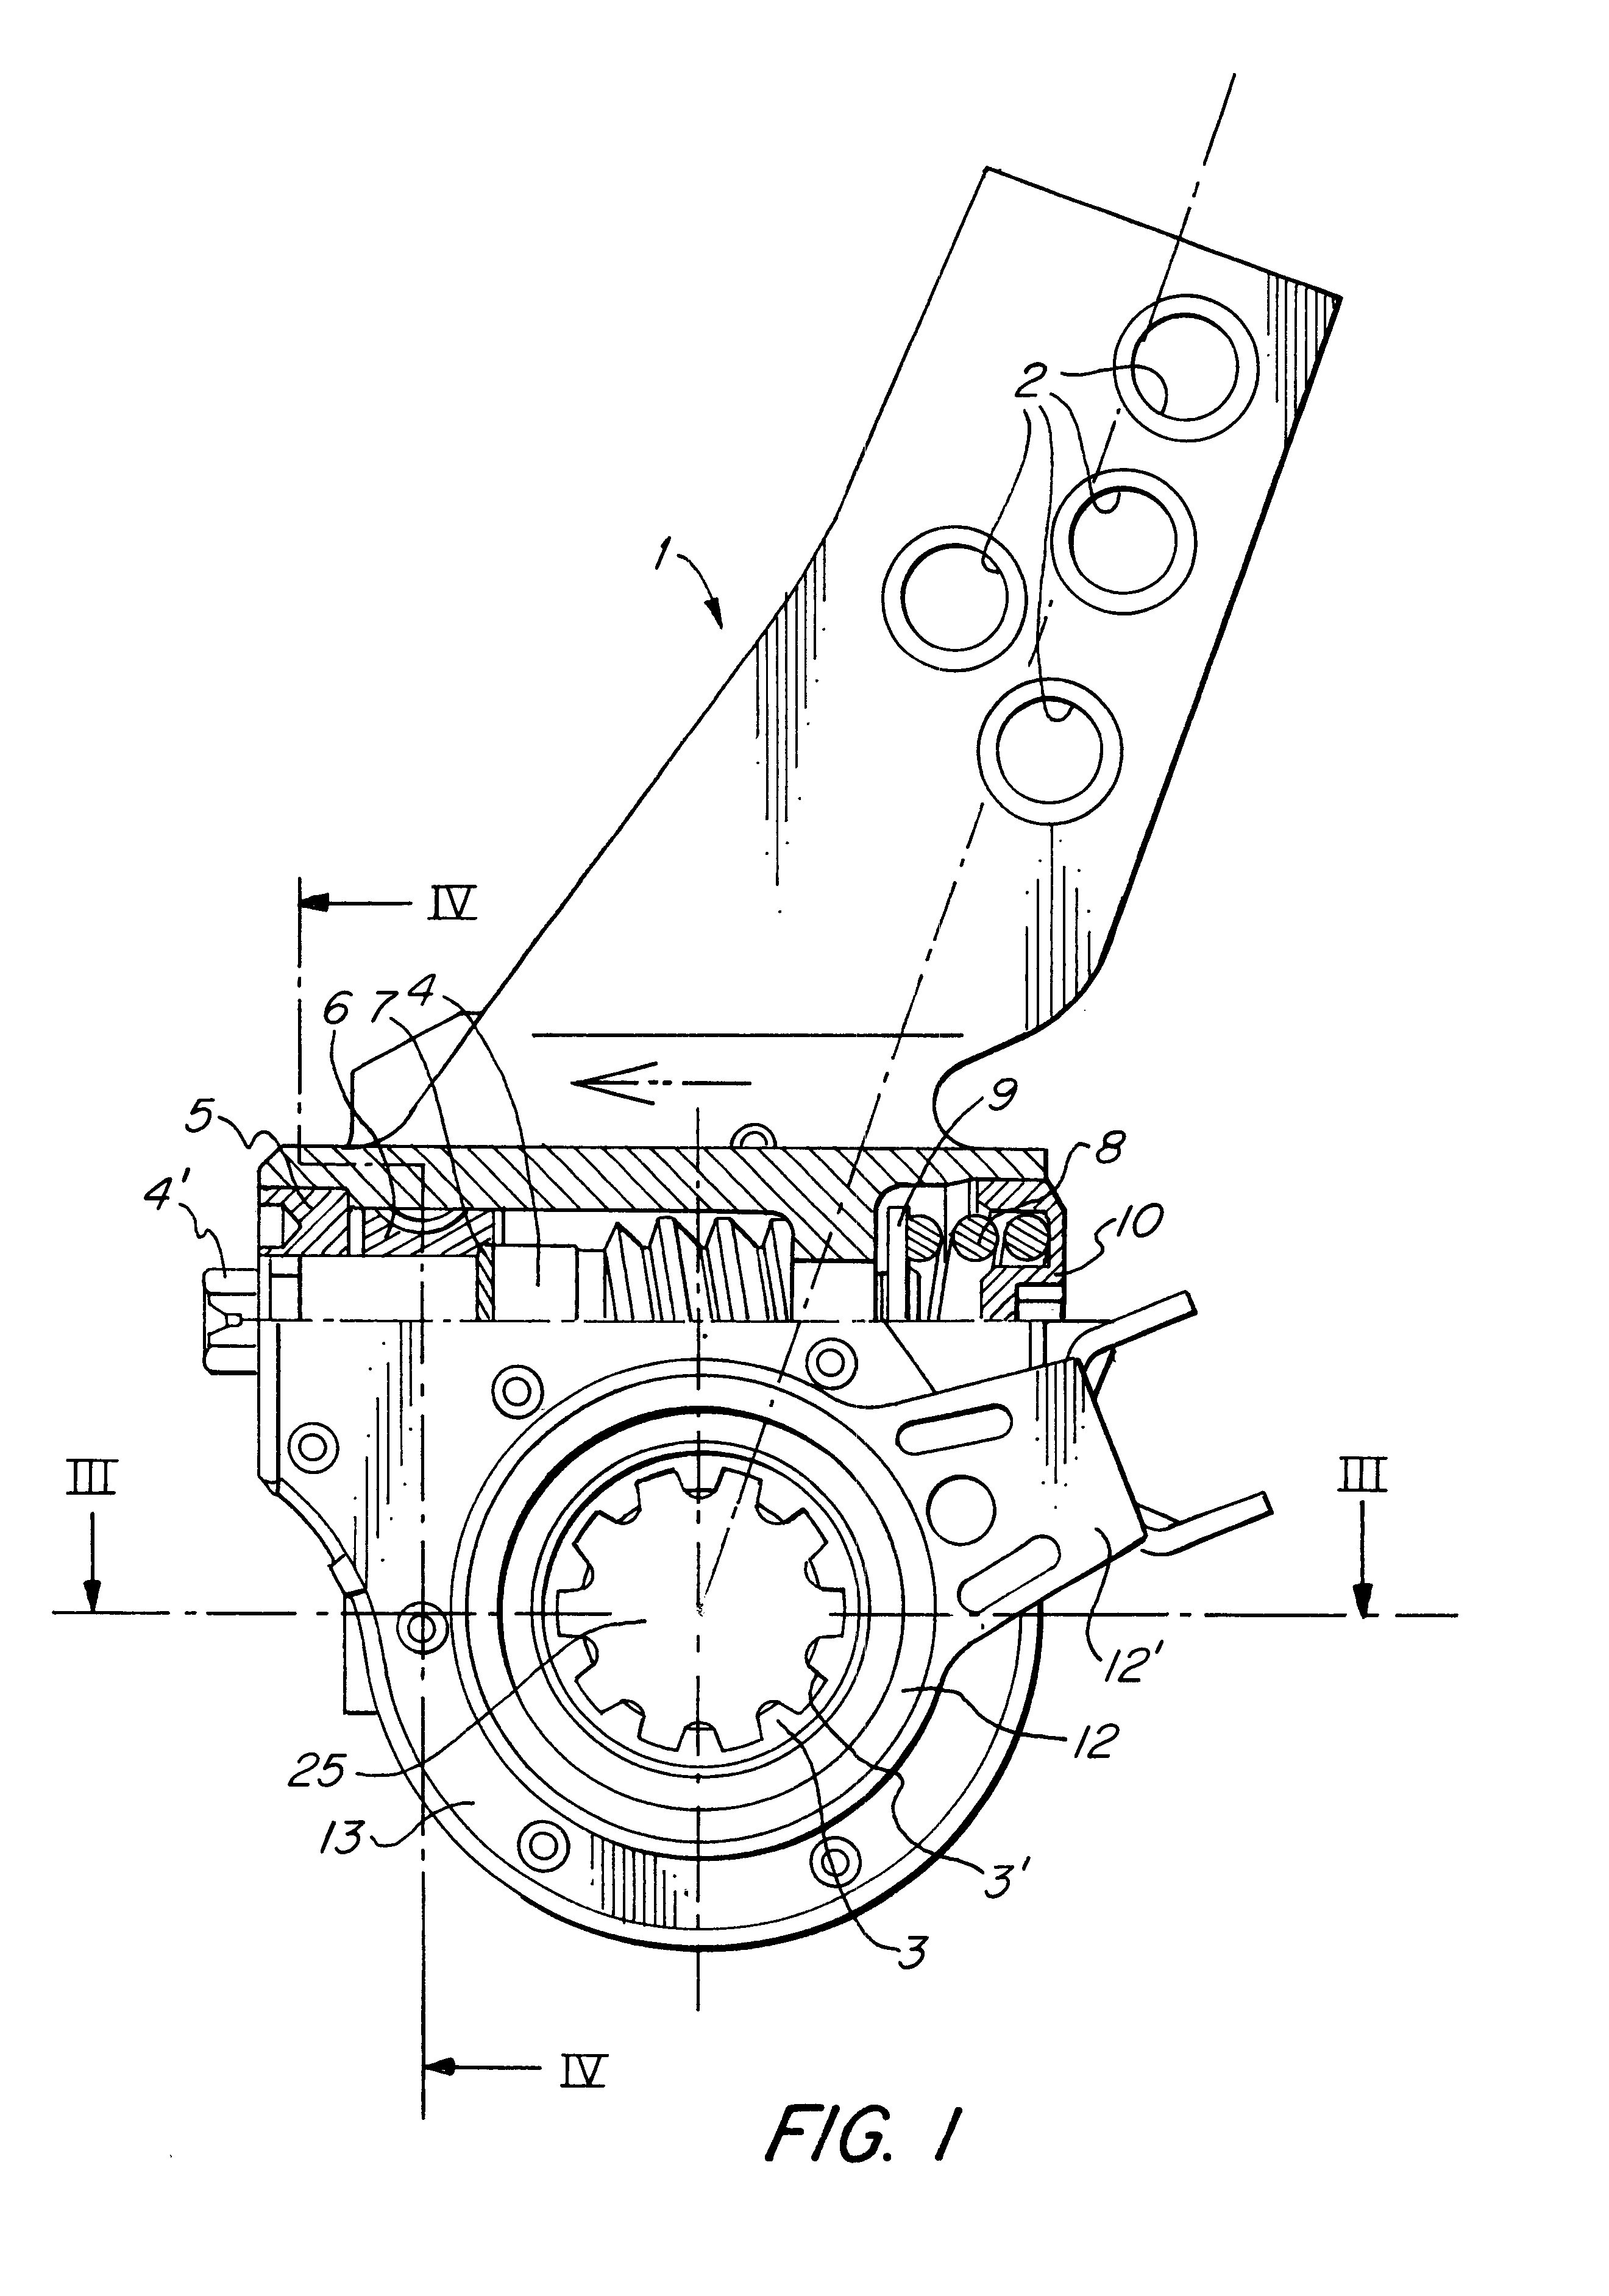 Control arrangement for a brake lever